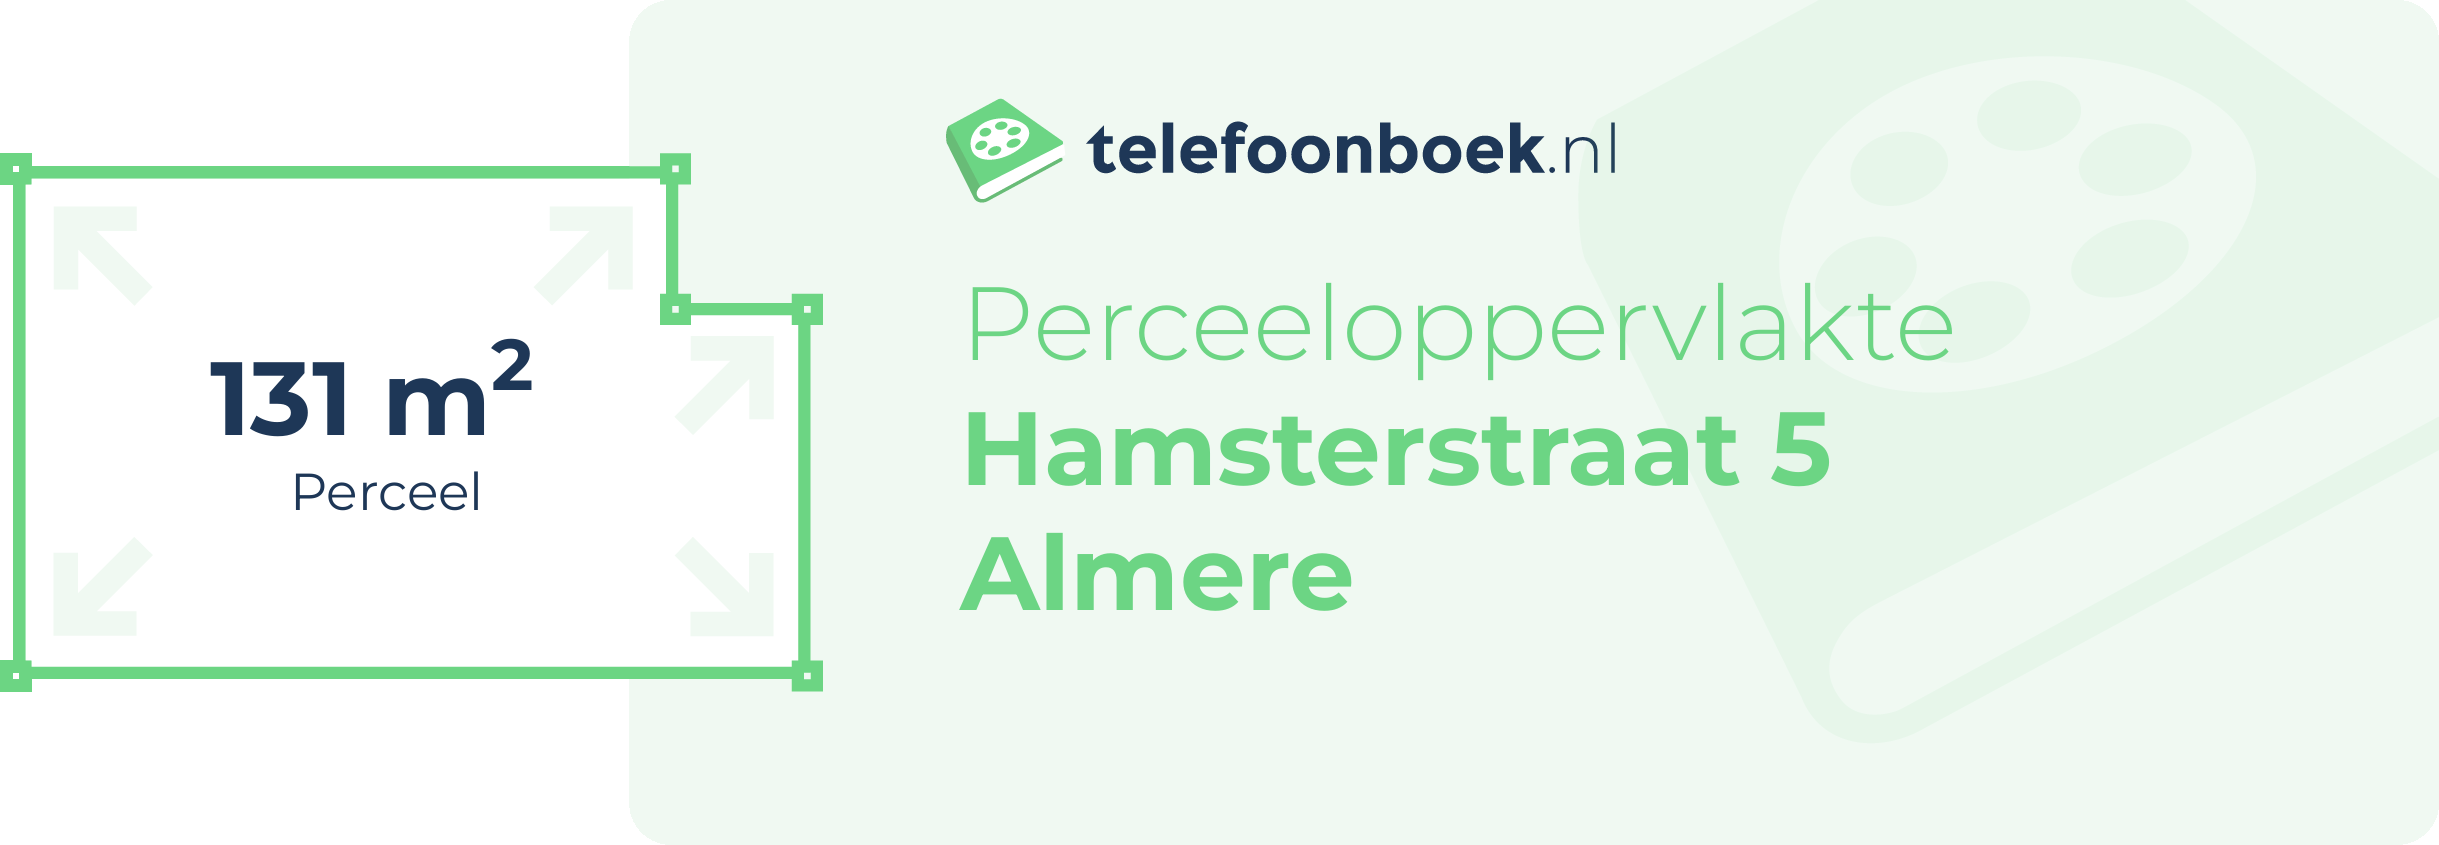 Perceeloppervlakte Hamsterstraat 5 Almere